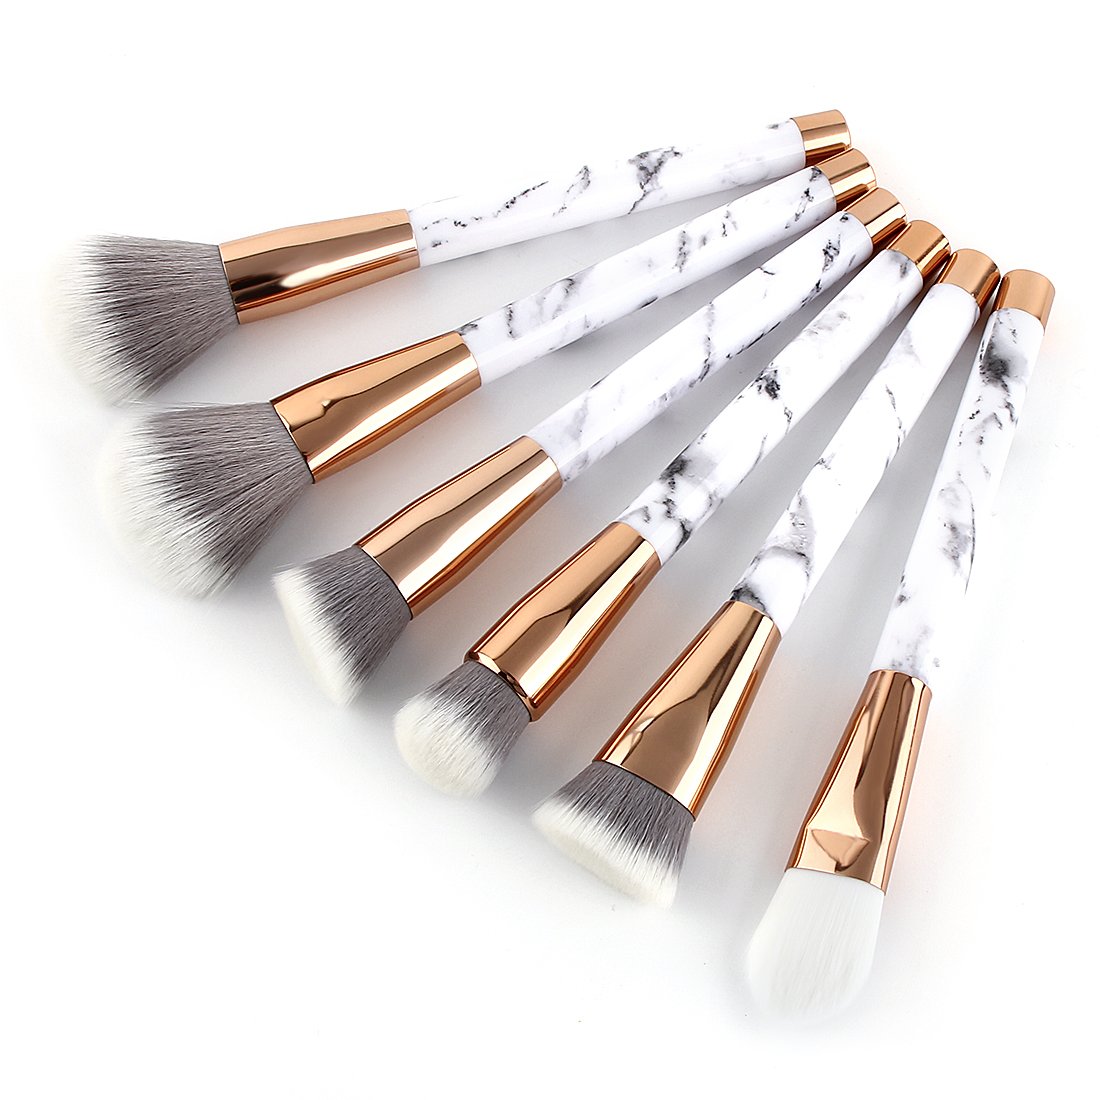 UNIMEIX Makeup Brushes 15 Pieces Makeup Brush Set Premium Face Eyeliner Blush Contour Foundation Cosmetic Brushes for Powder Liquid Cream